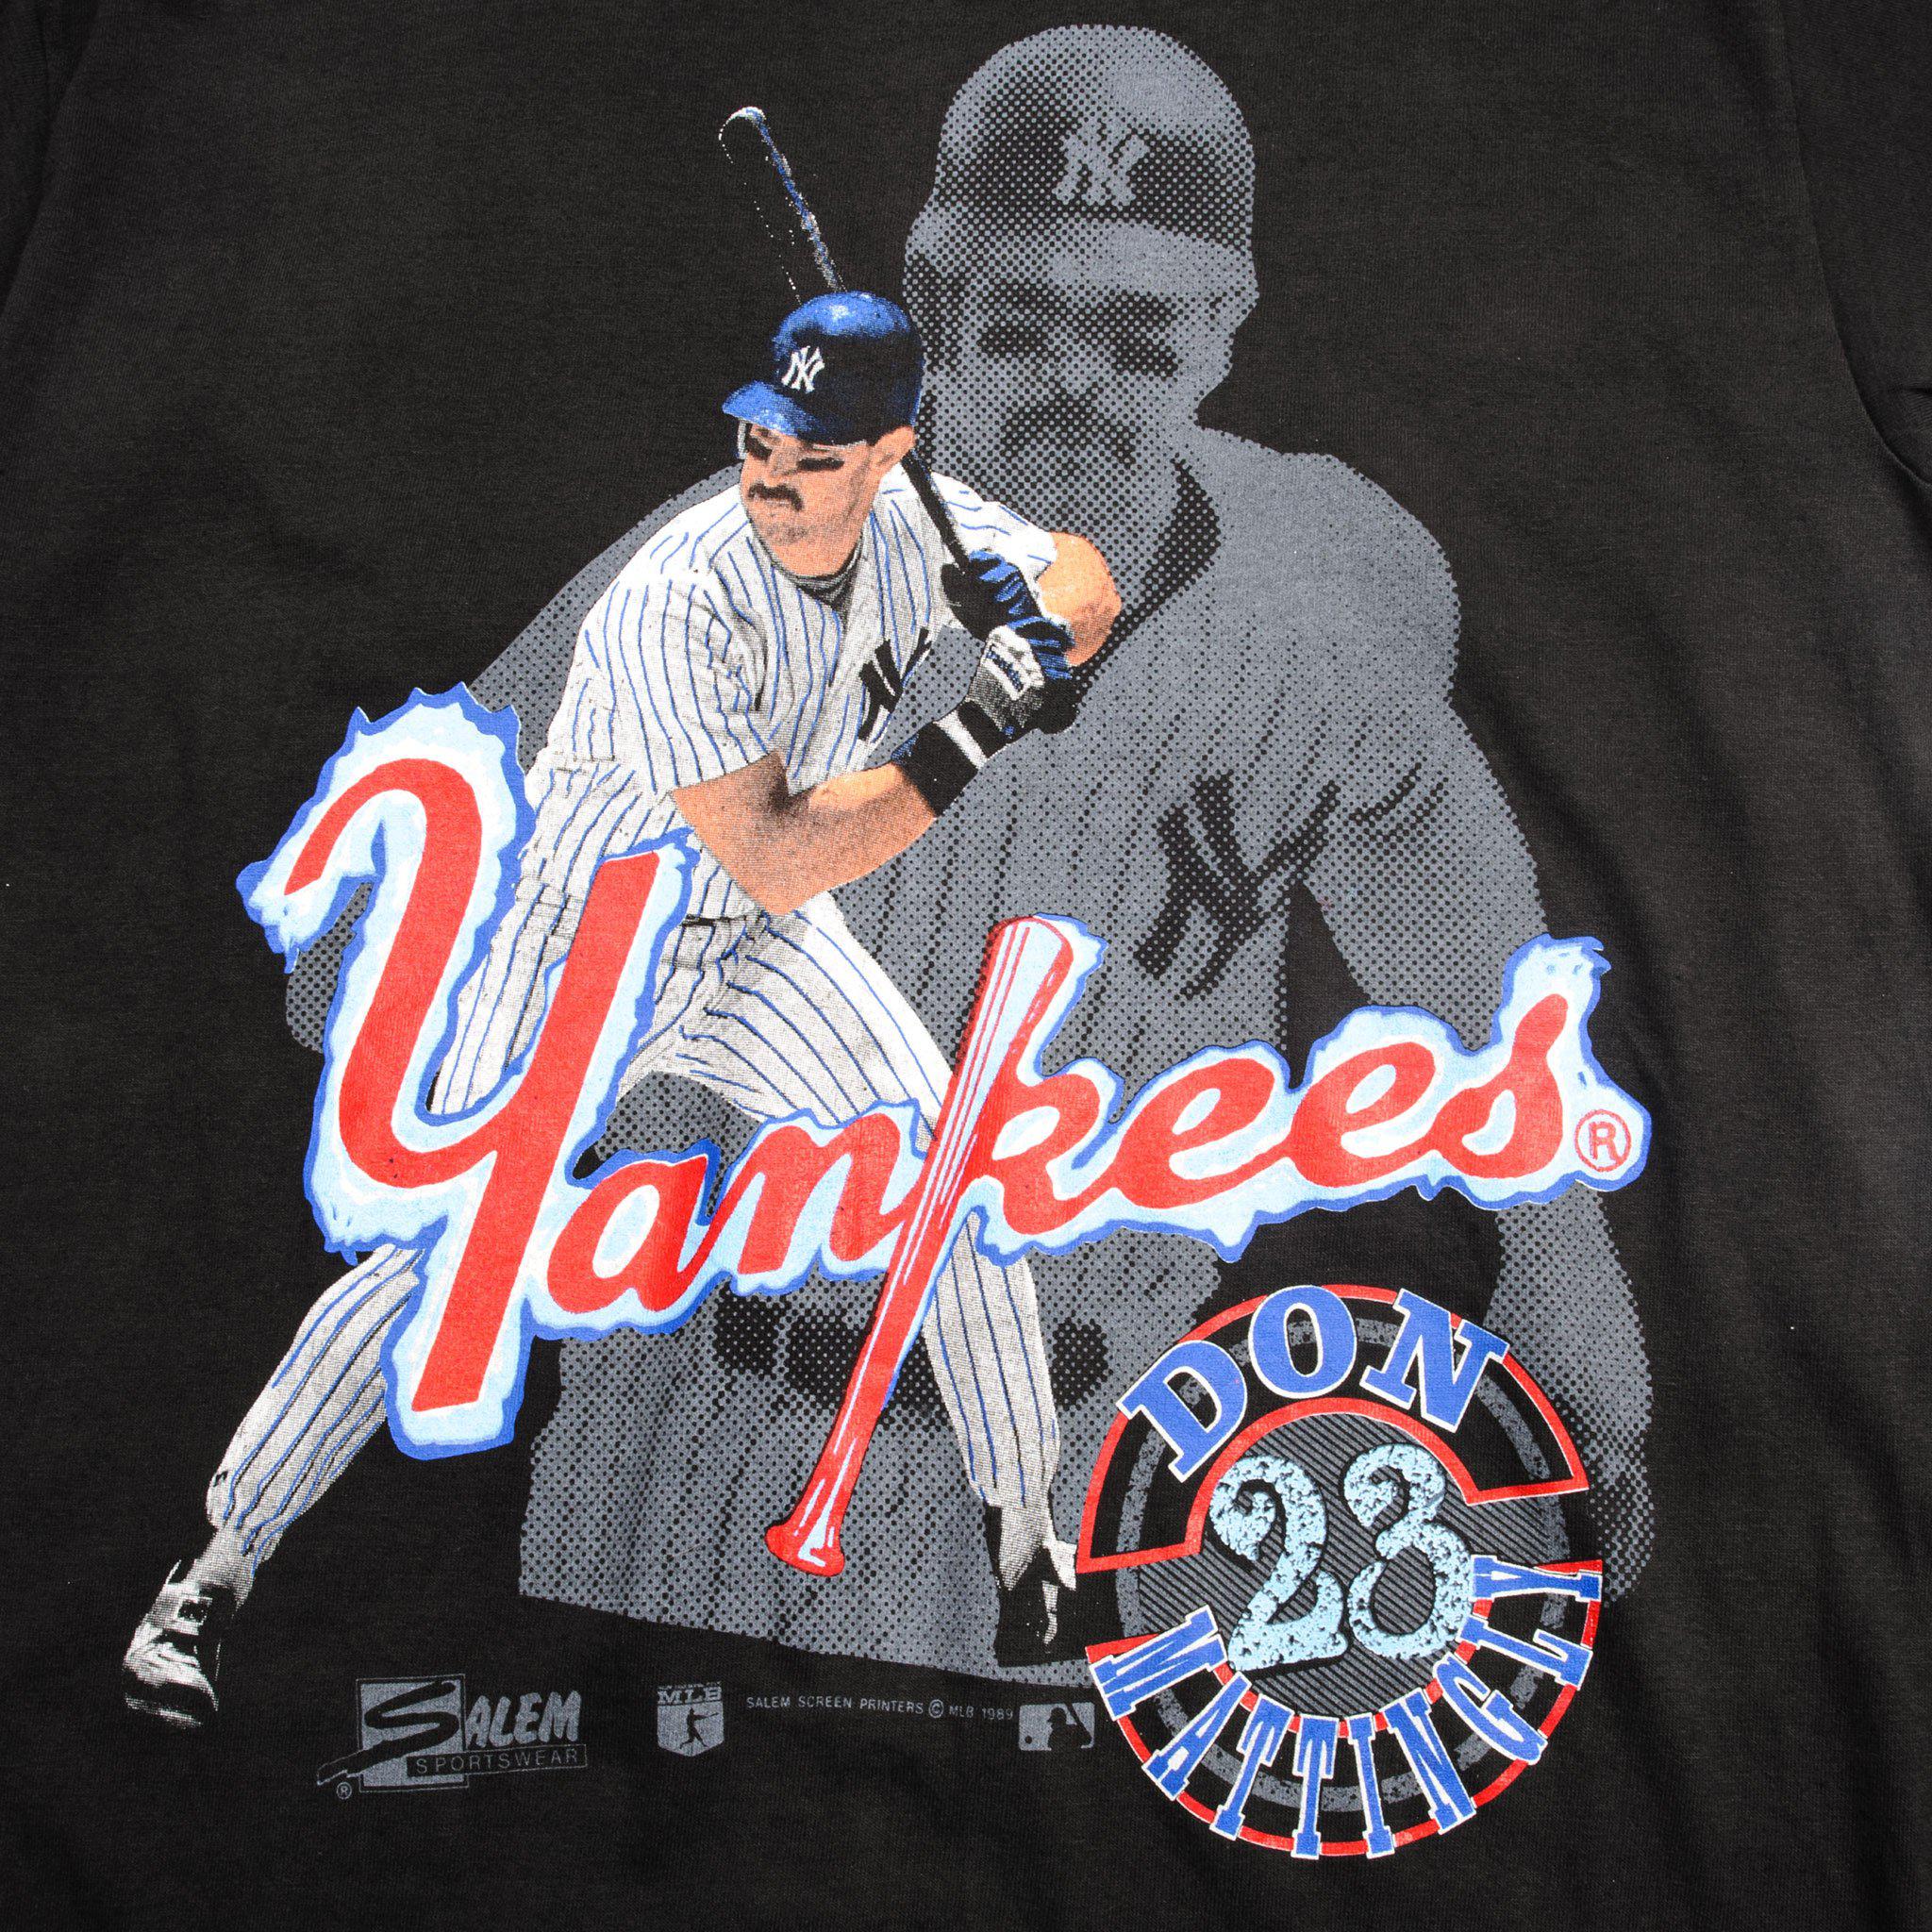 Sports / College Vintage MLB NY Yankees Don Mattingly Tee Shirt 1989 Size Medium Made in USA